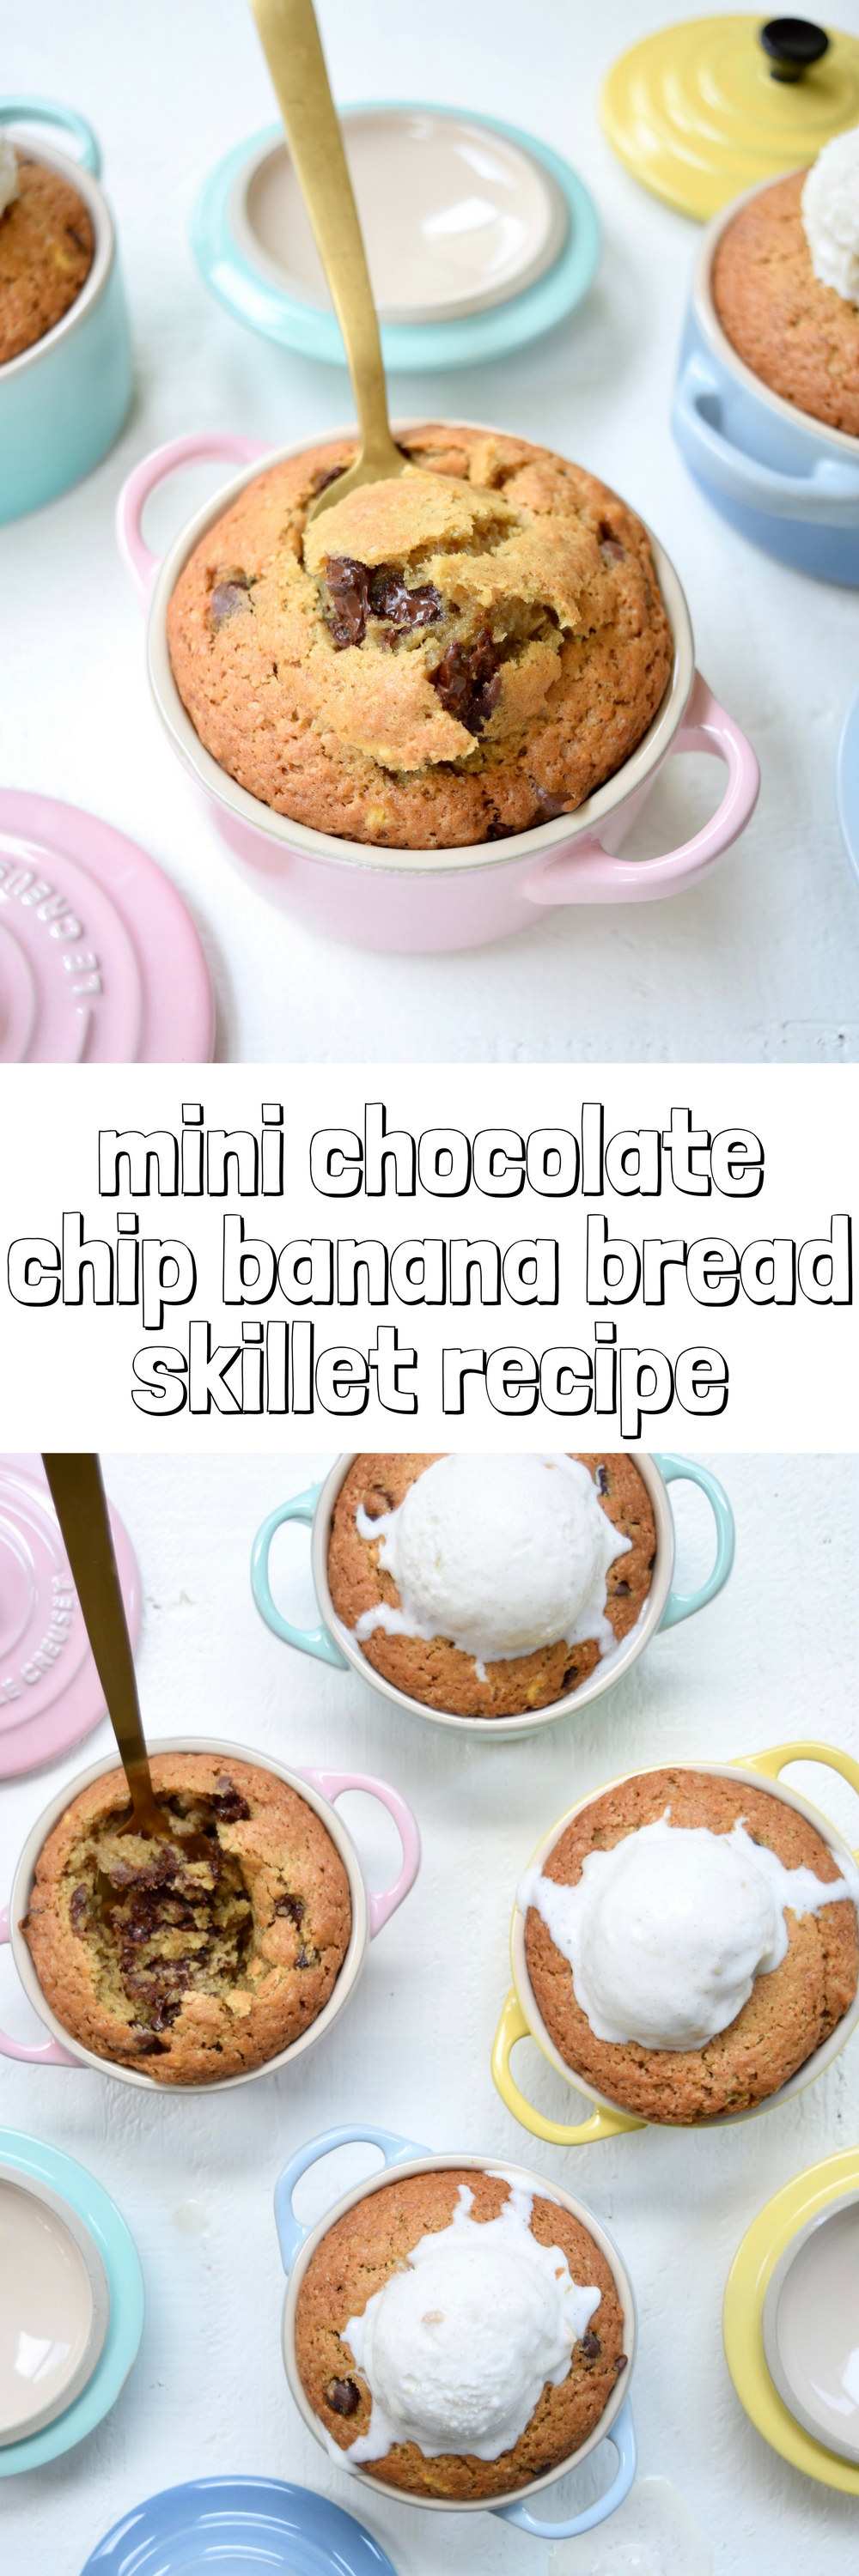 mini chocolate chip banana bread skillet recipe